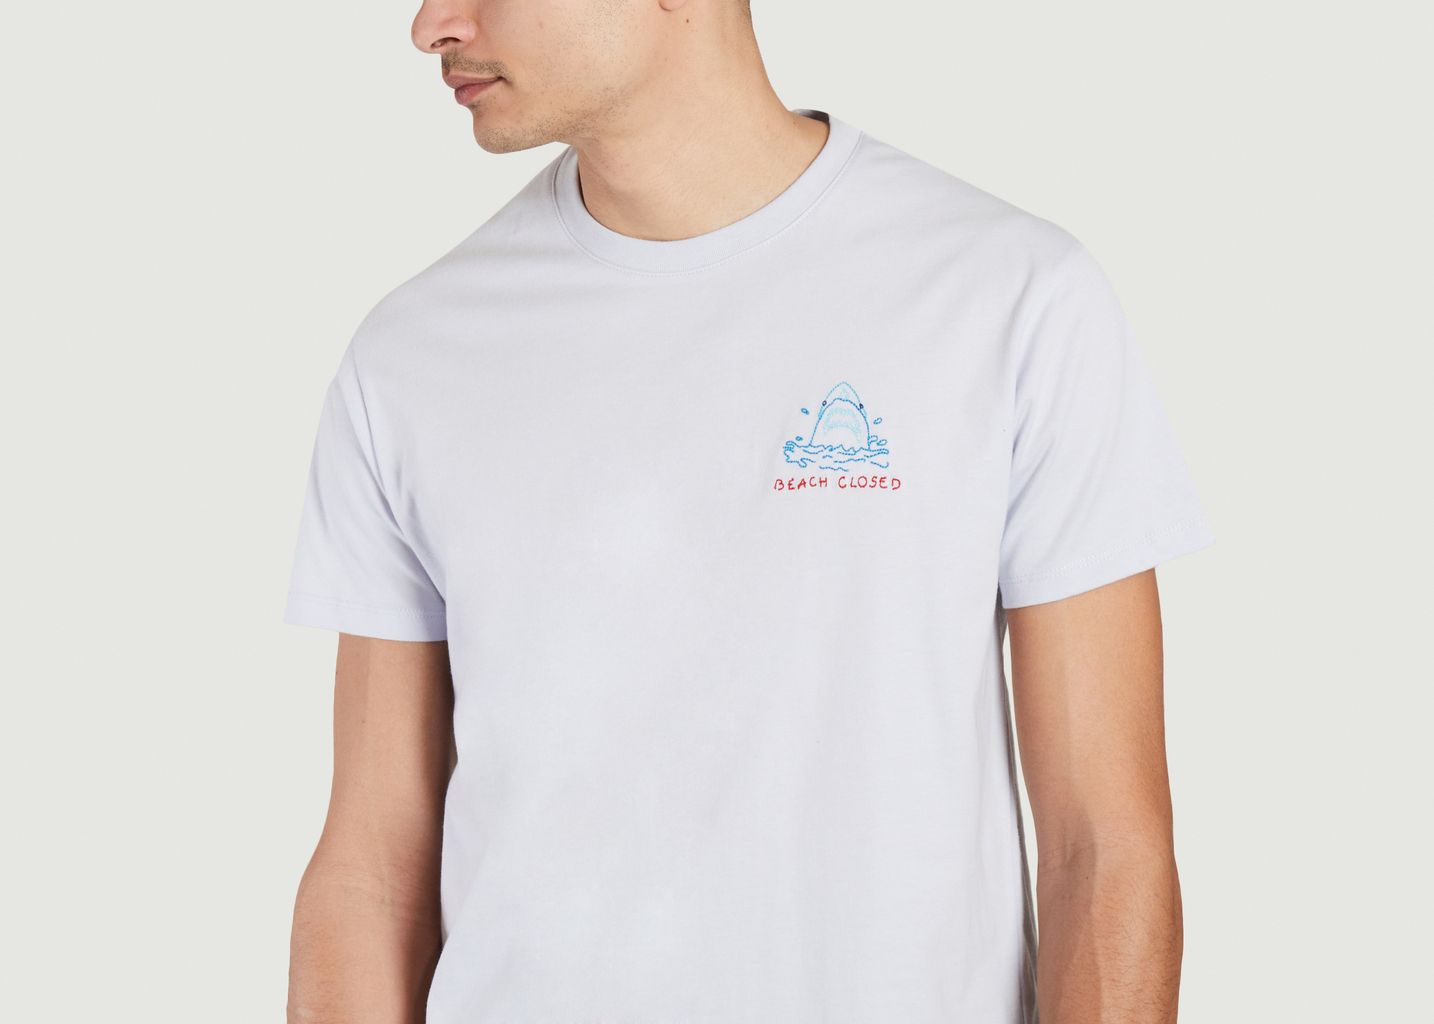 Popincourt T-shirt - Maison Labiche